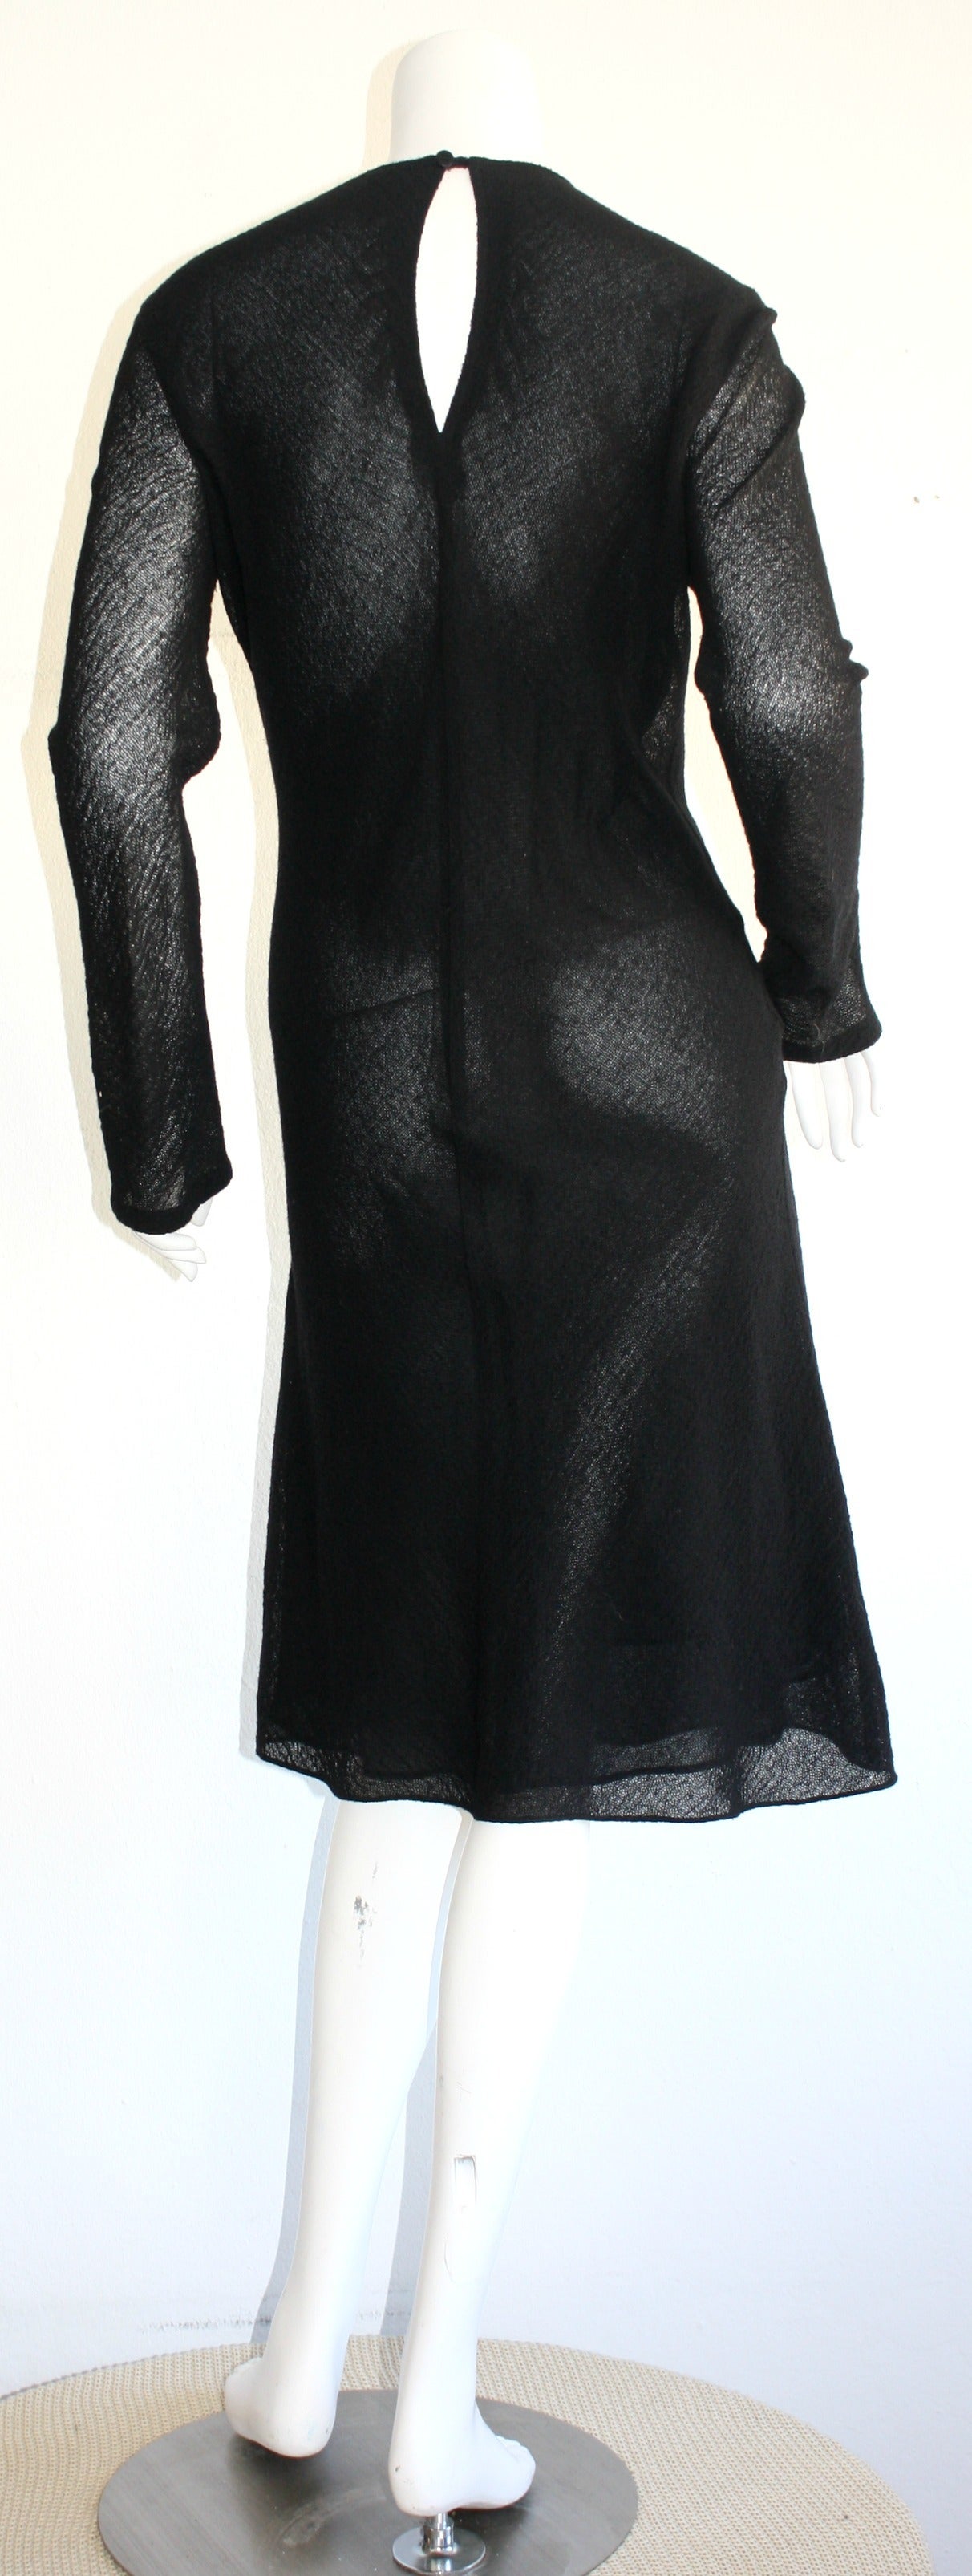 calvin klein black dress with sleeves